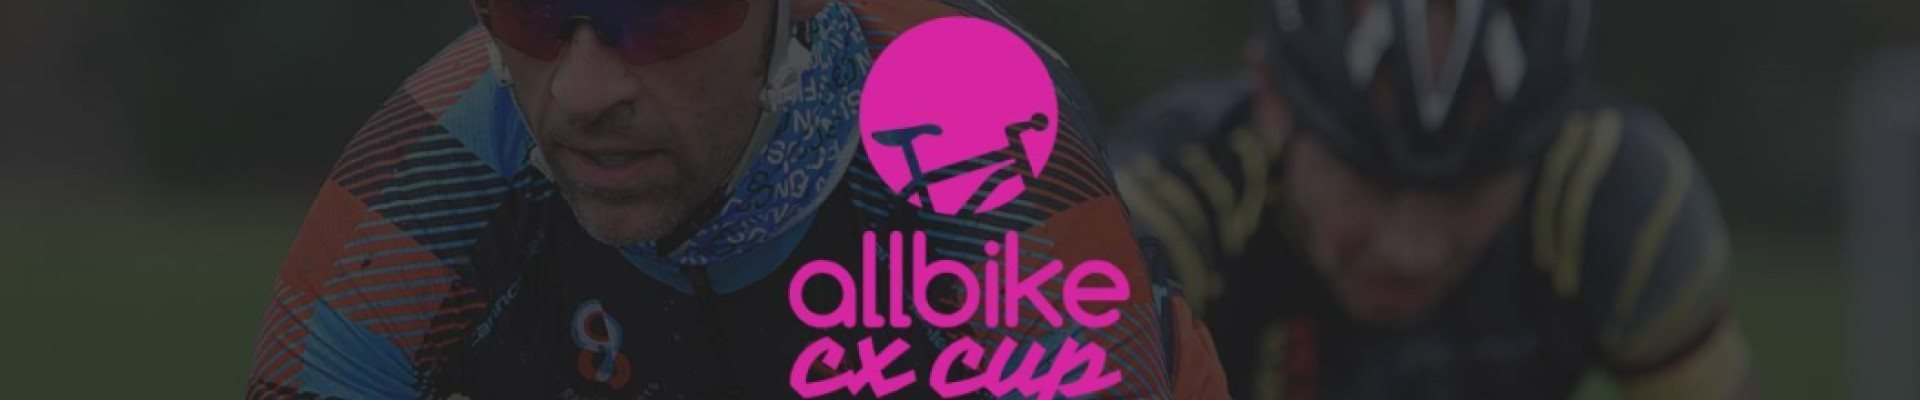 Allbike CX cup 20/21 #4 Hammel - Aflyst